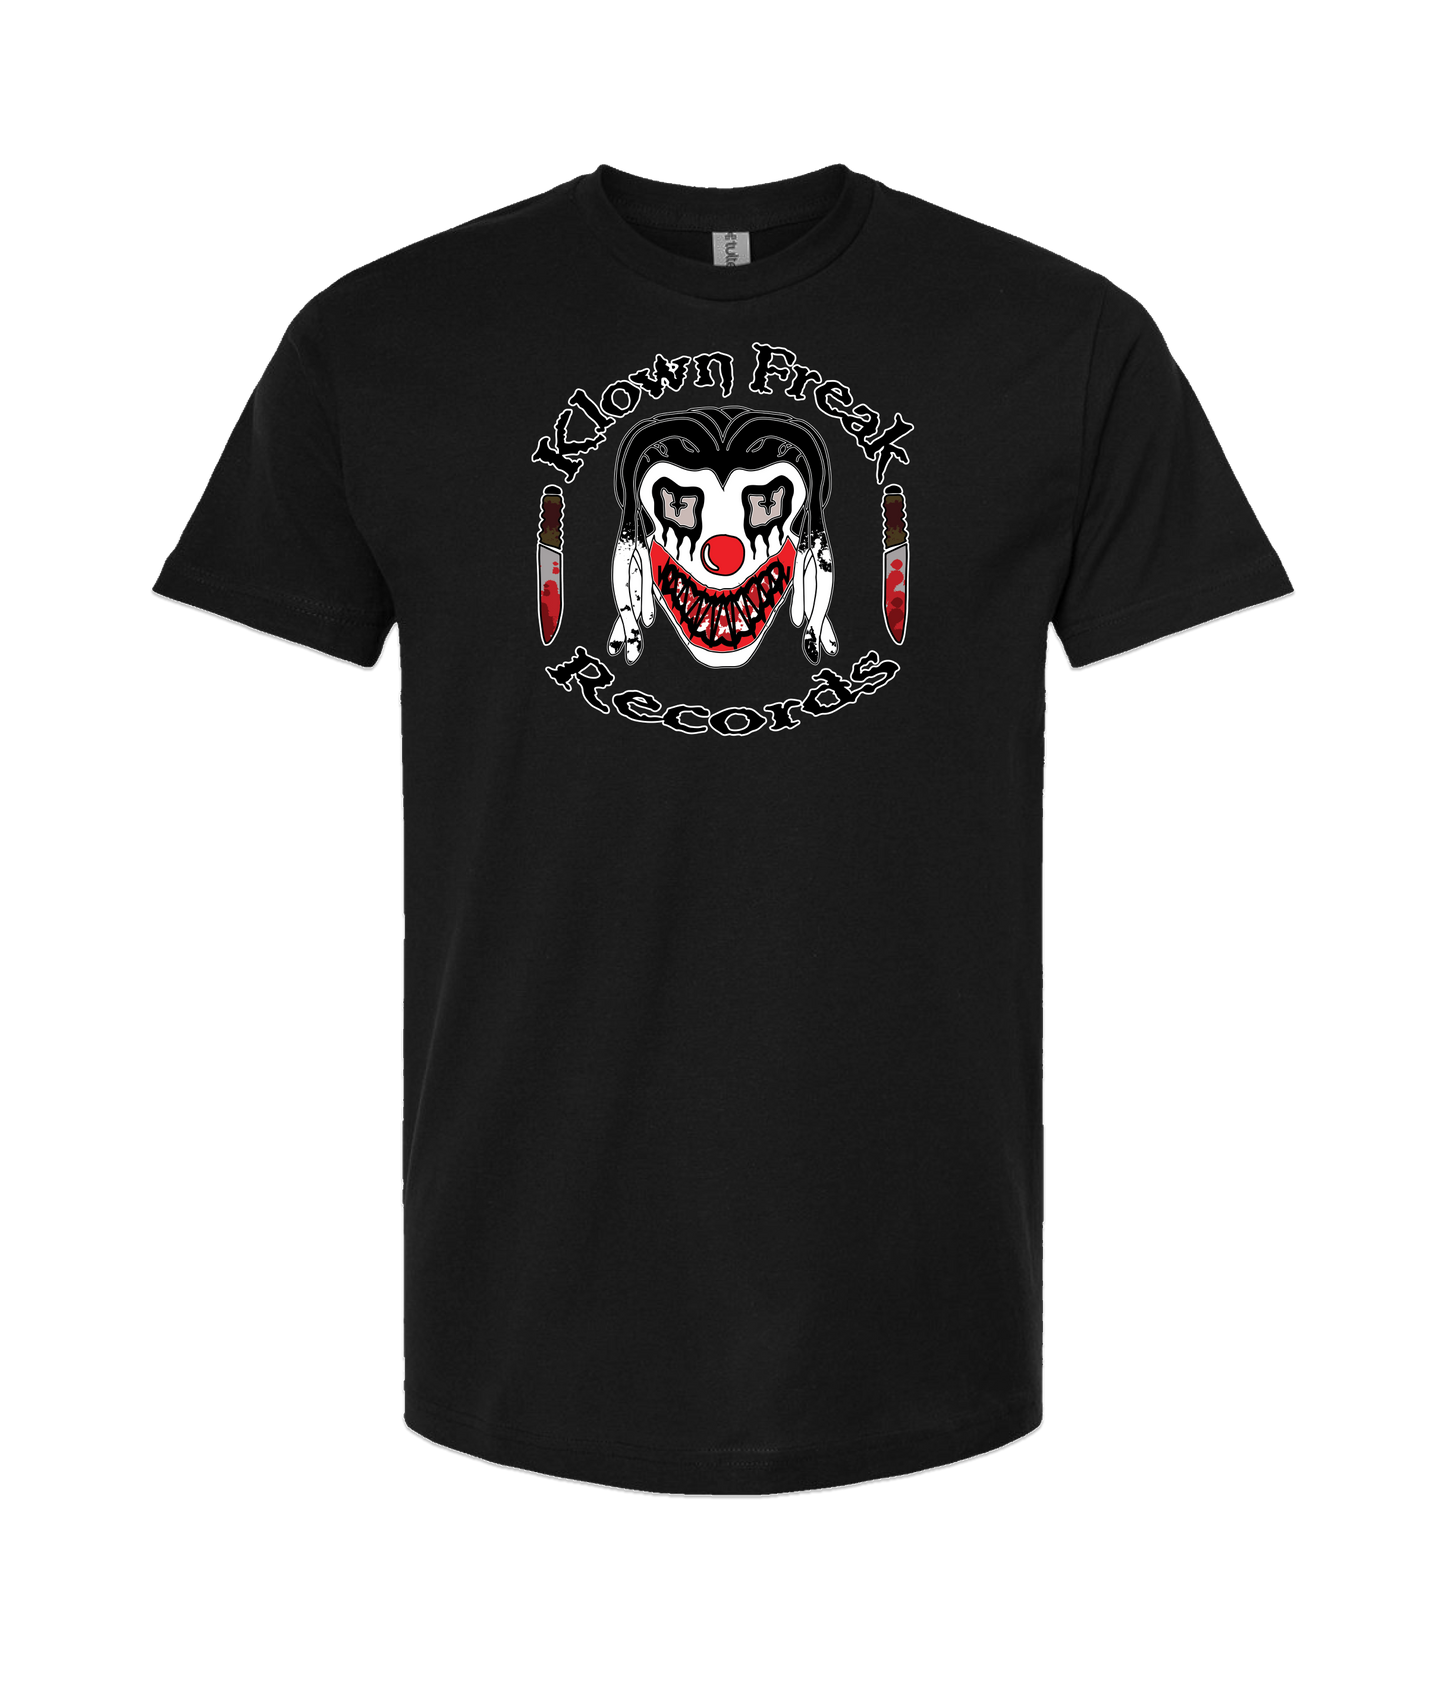 ?CARNAGE! - Klown - Black T-Shirt